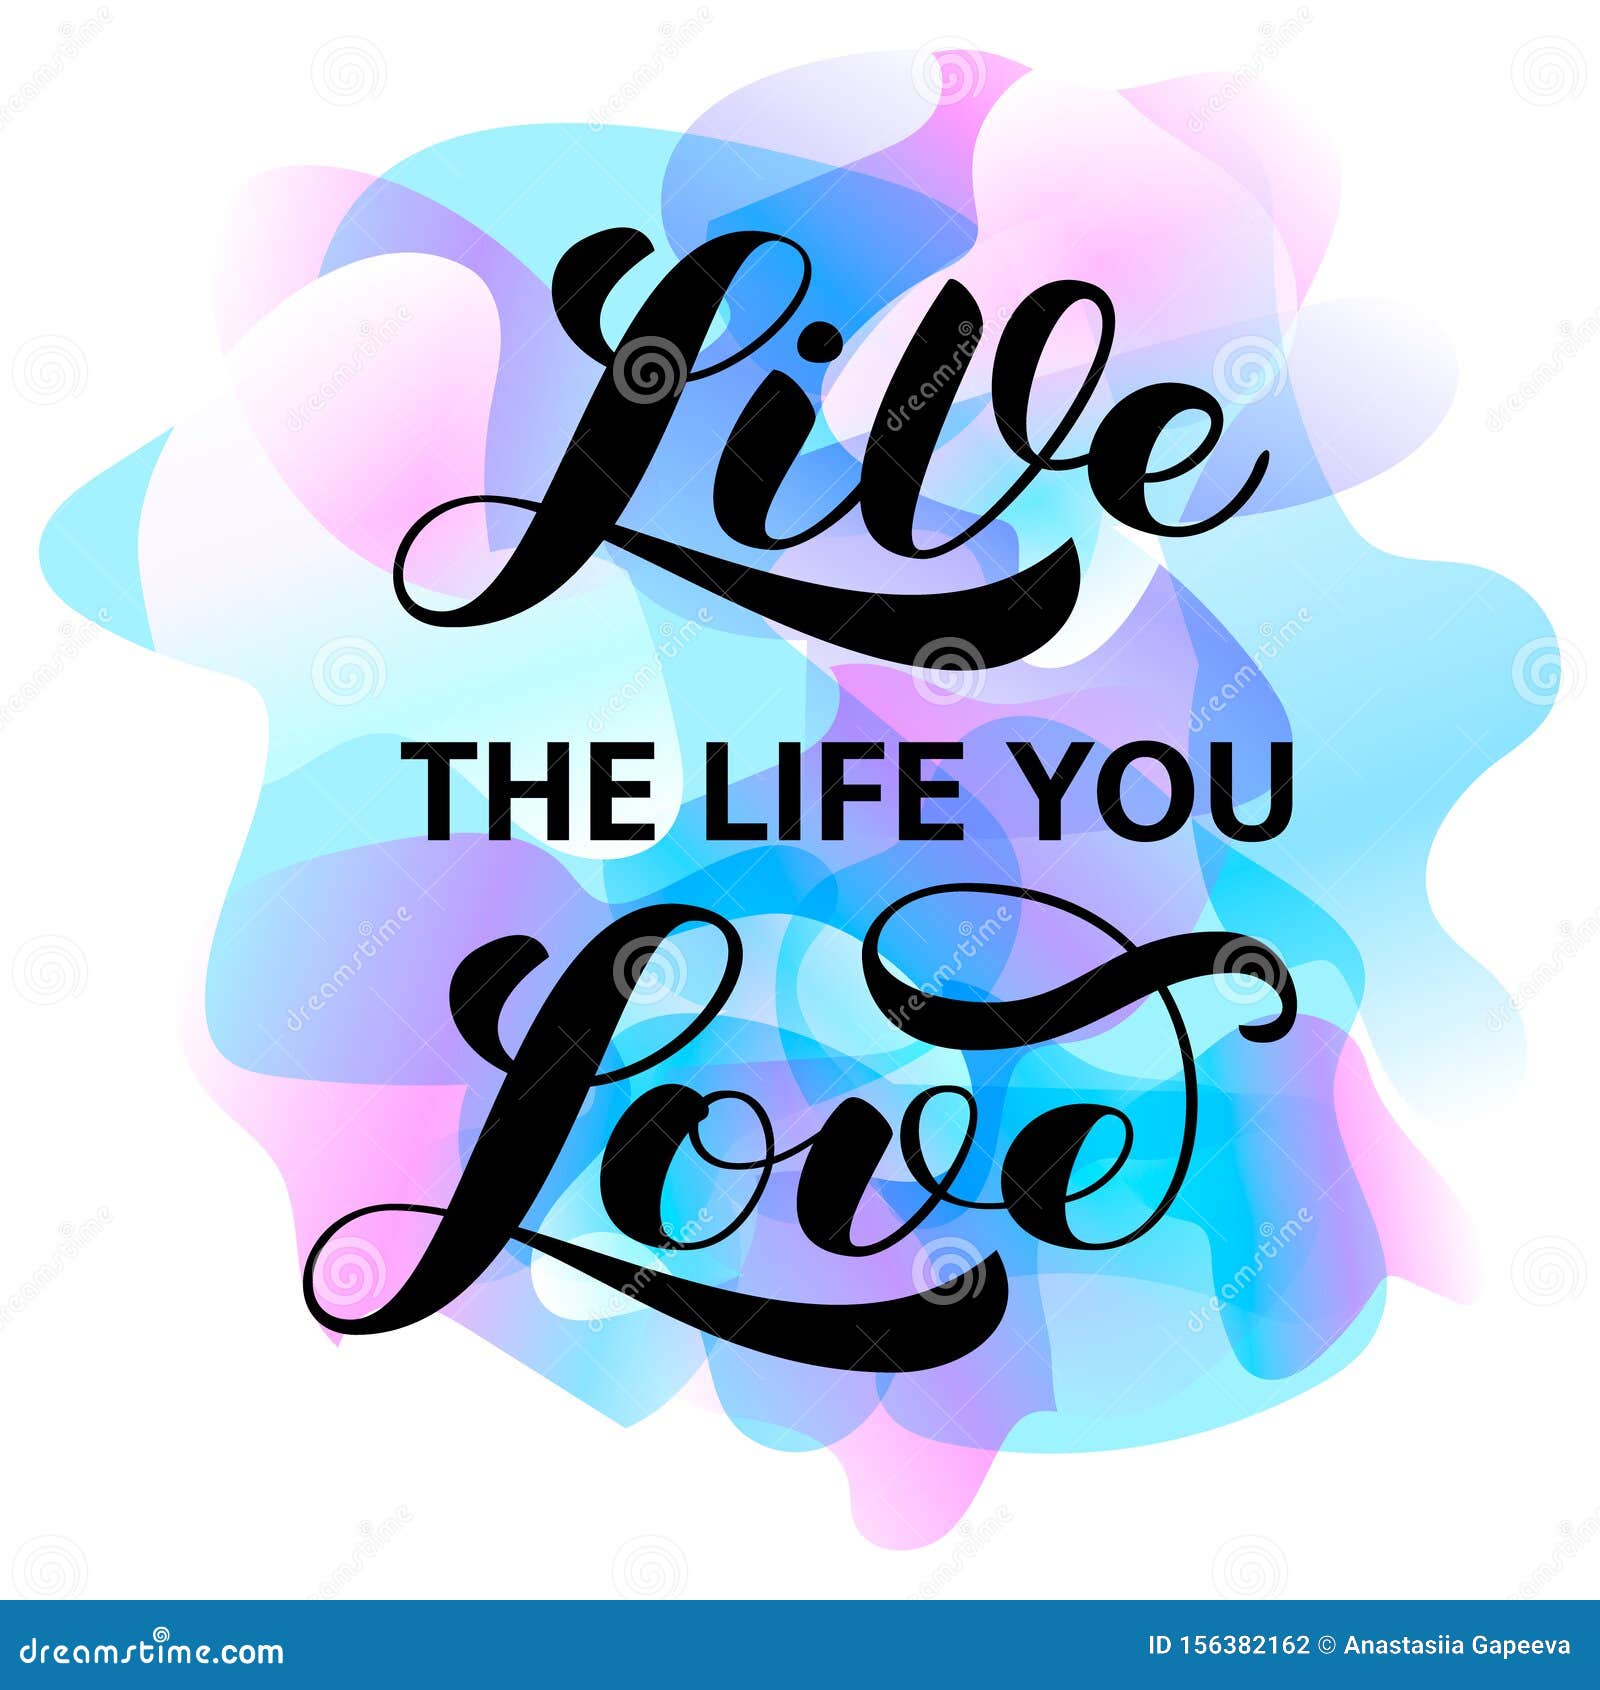 Live The Life You Love Brush Lettering Vector Illustration For Banner Or Poster Stock Vector Illustration Of Handwritten Owner